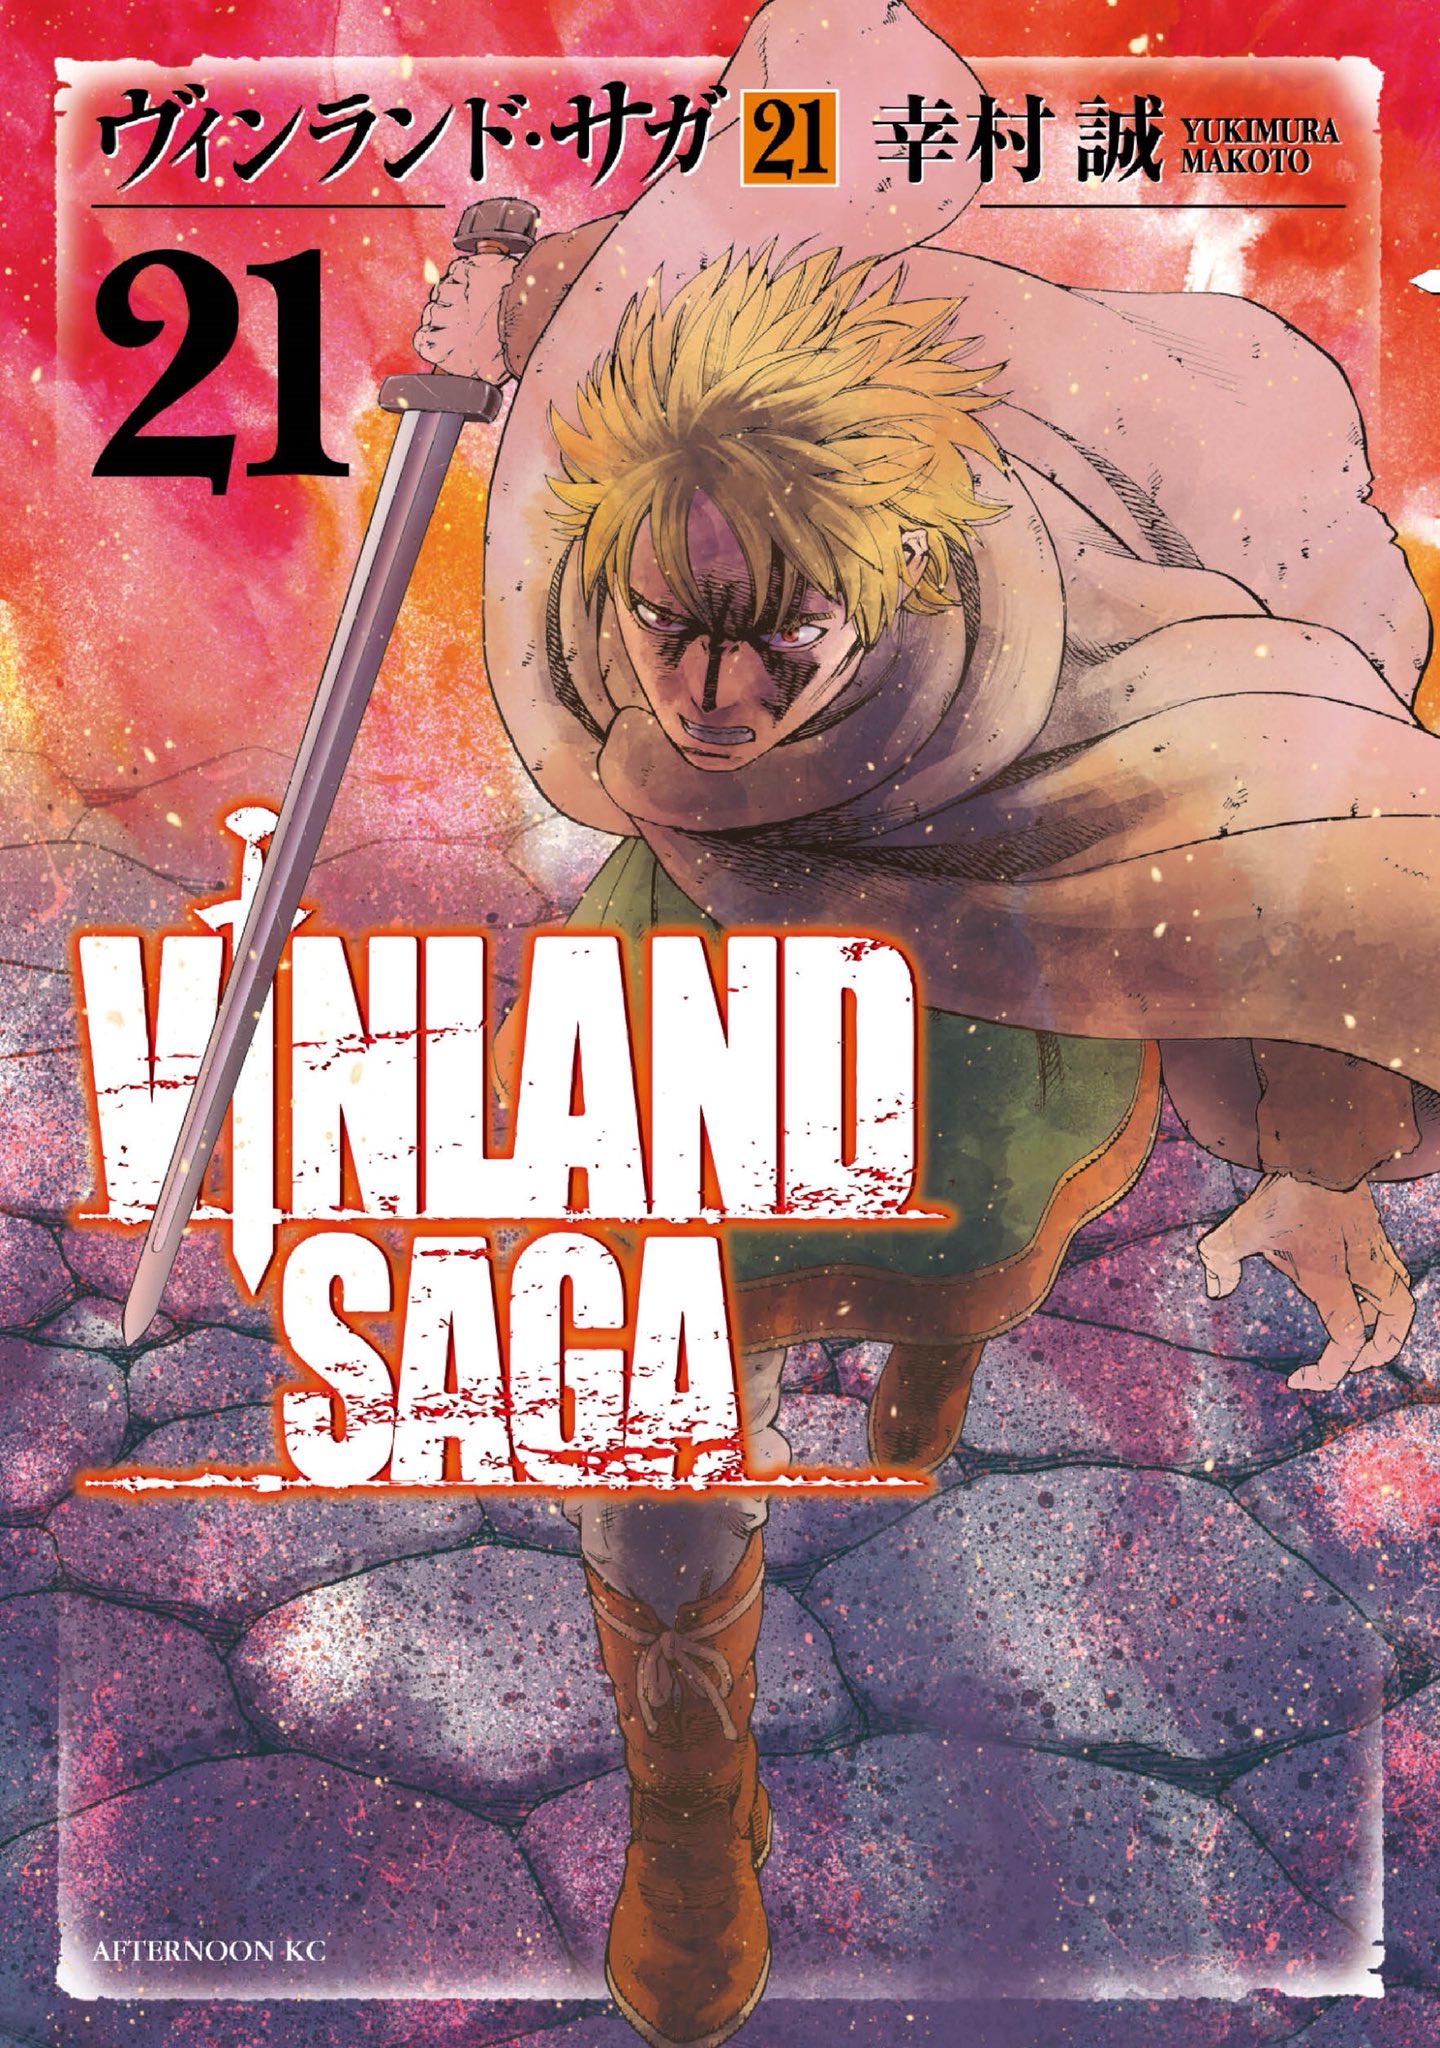 Vinland Saga: How To Read The Manga After Season 2